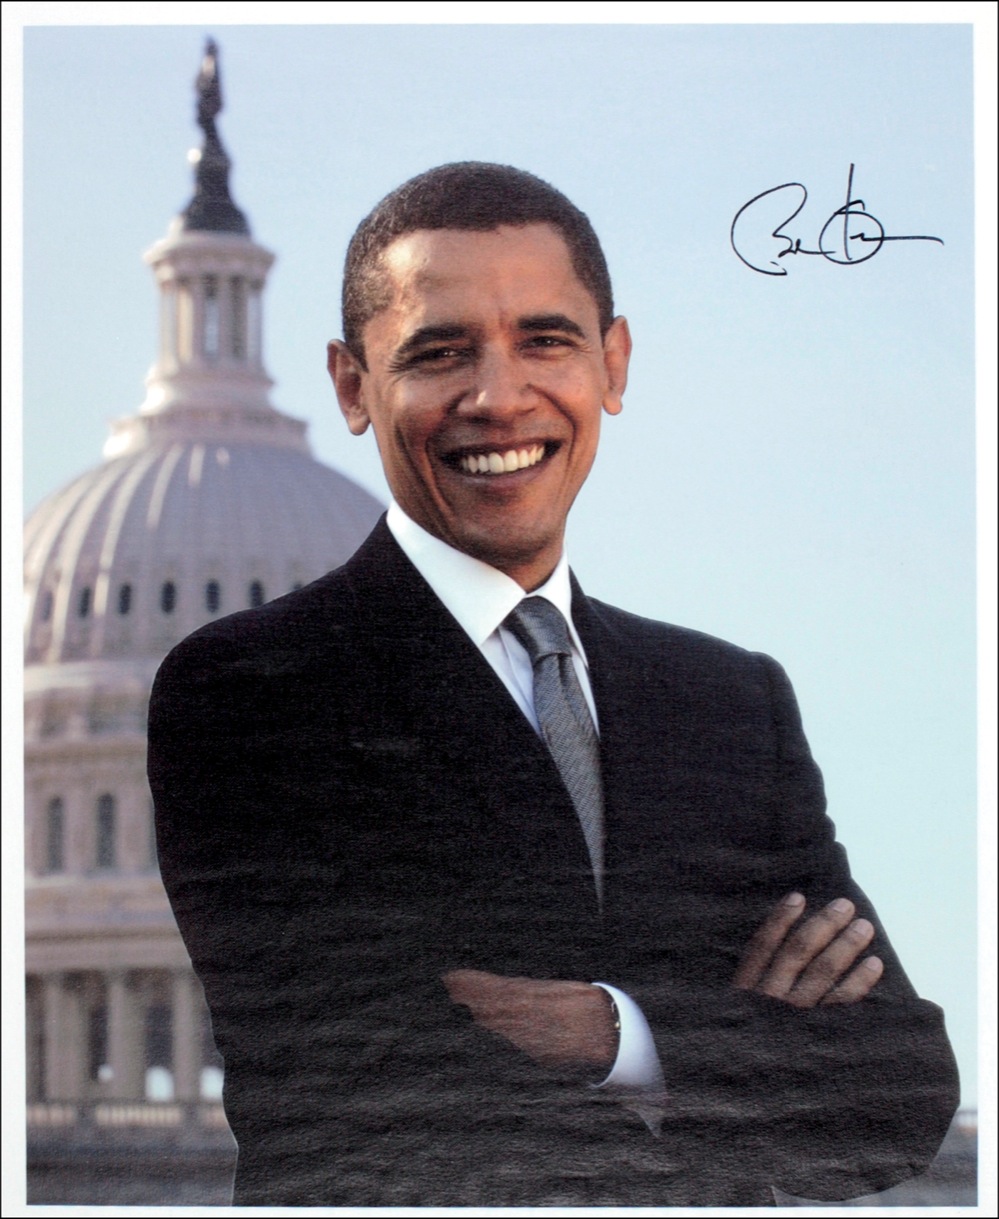 Lot #98 Barack Obama